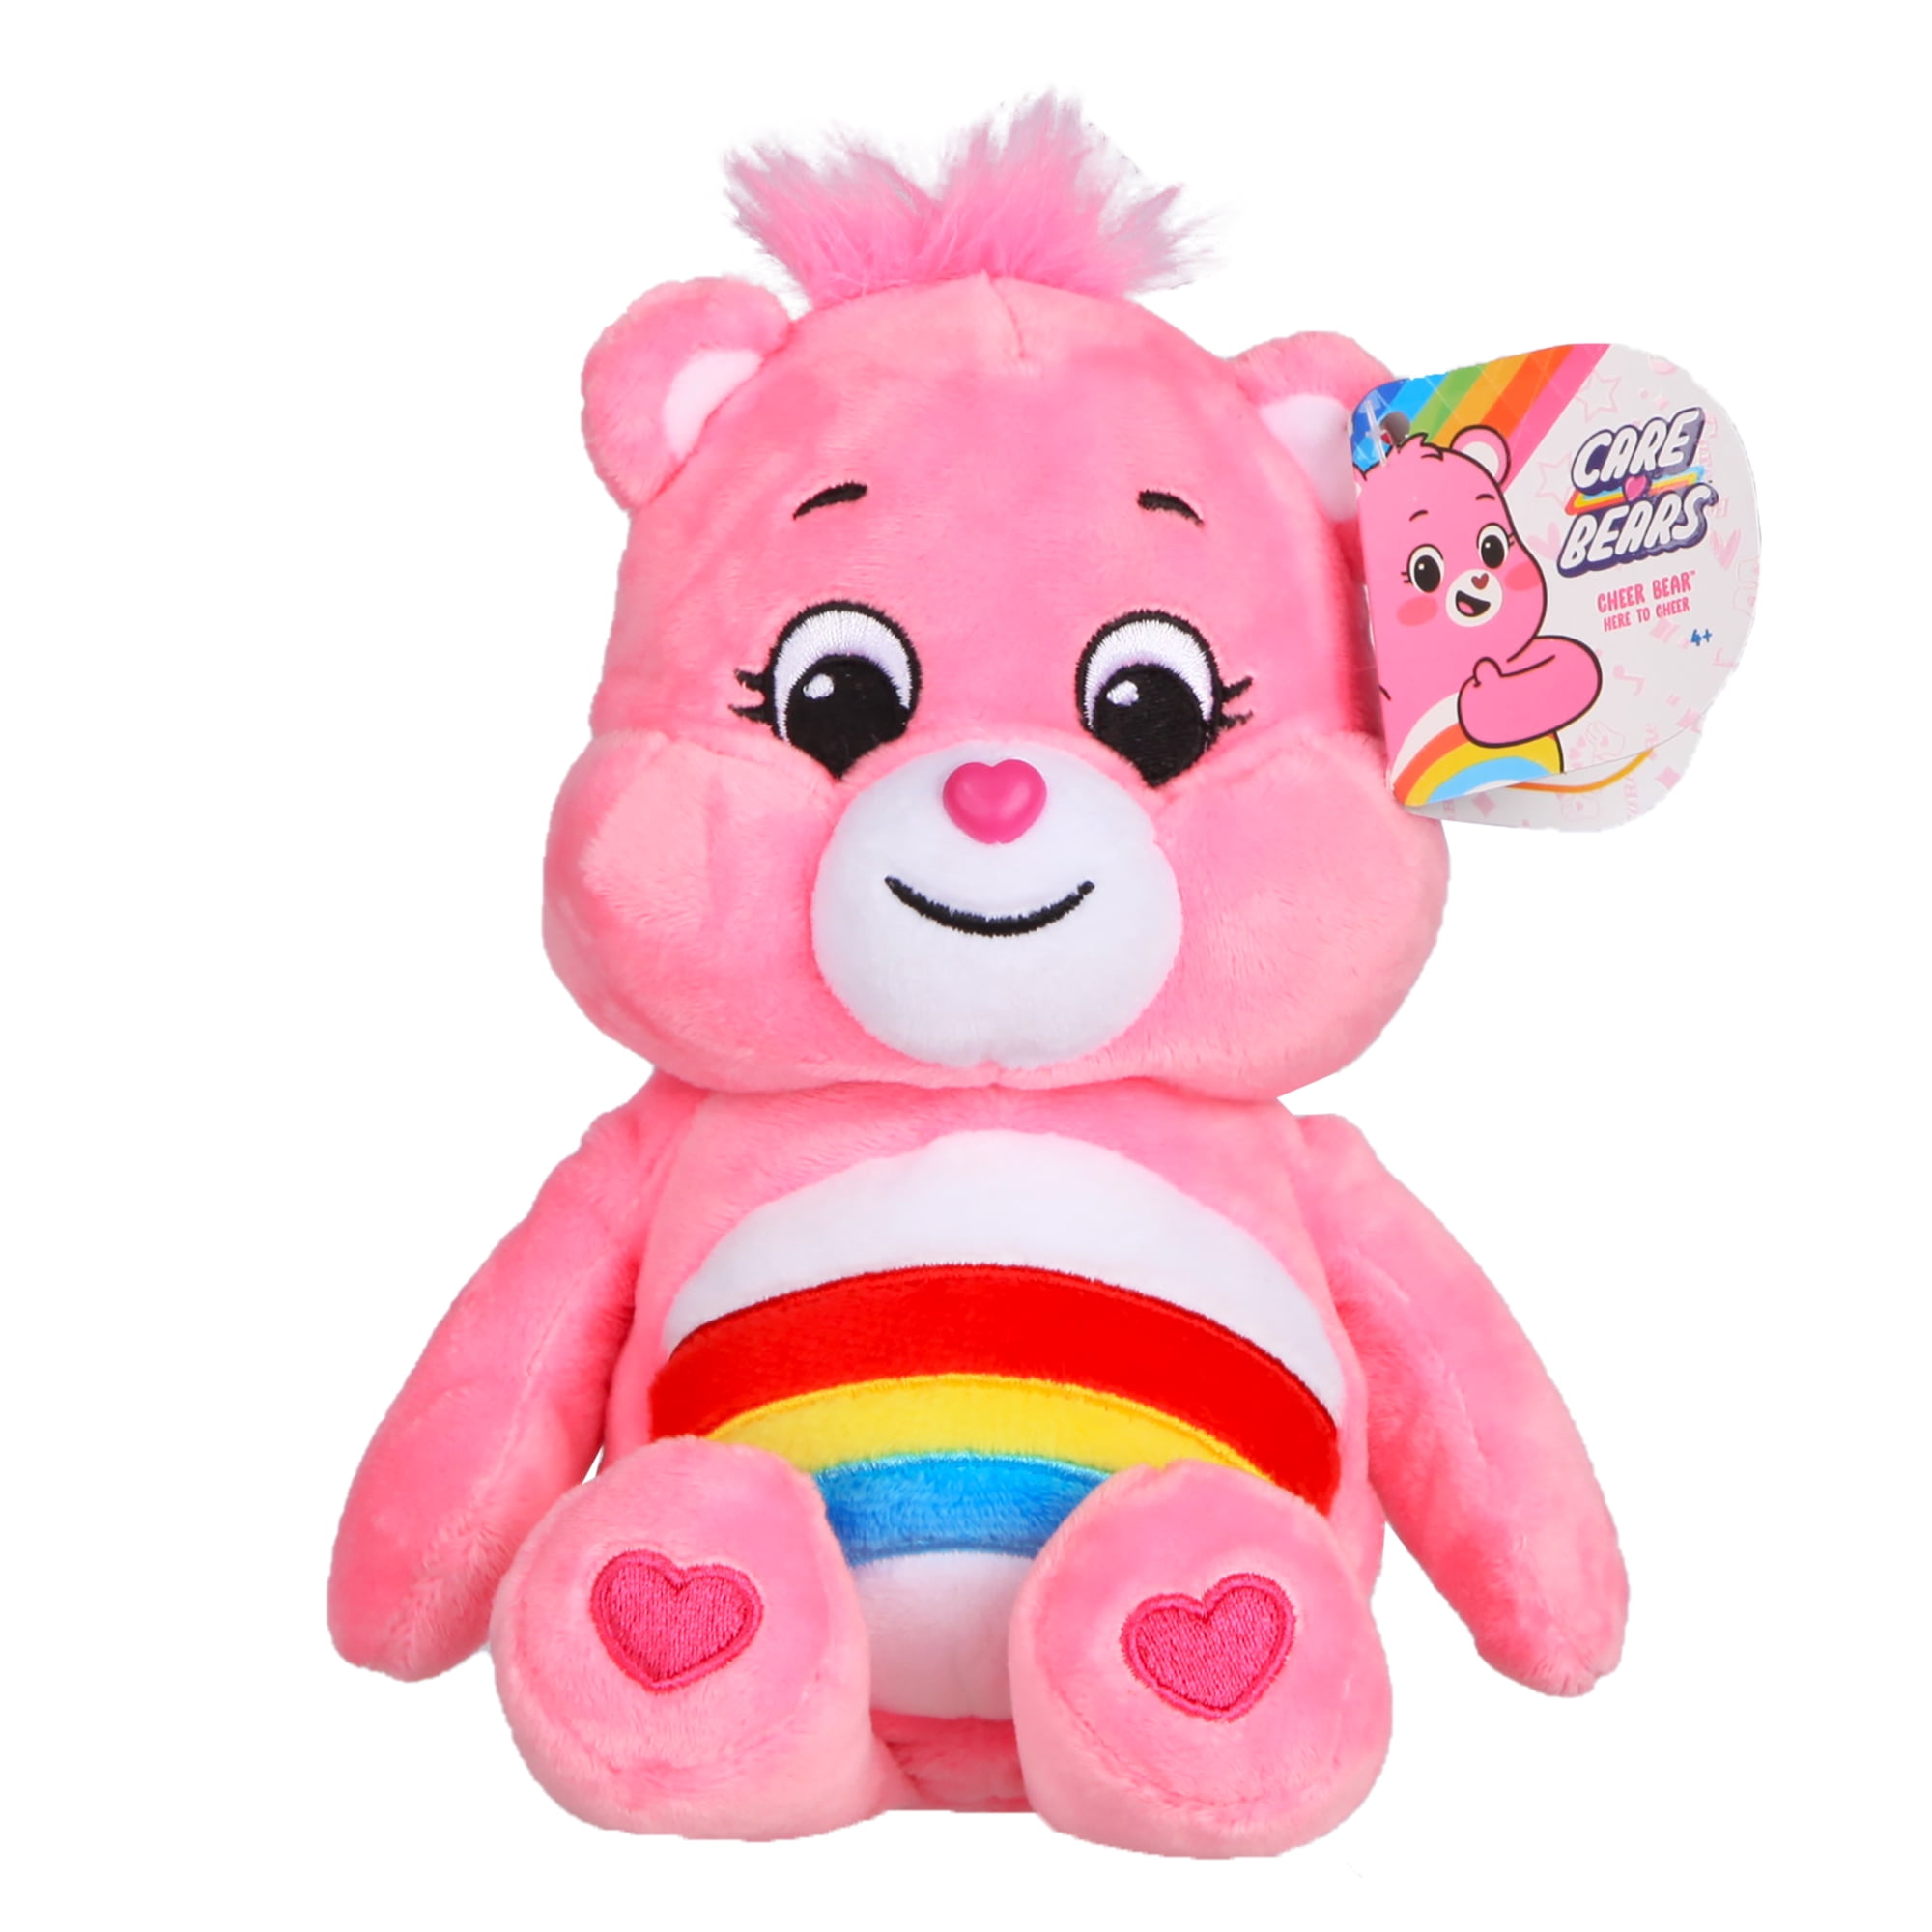 Care Bears 14 Inch Medium Plush Soft Huggable Material Cheer Bear Pink 2020 for sale online 